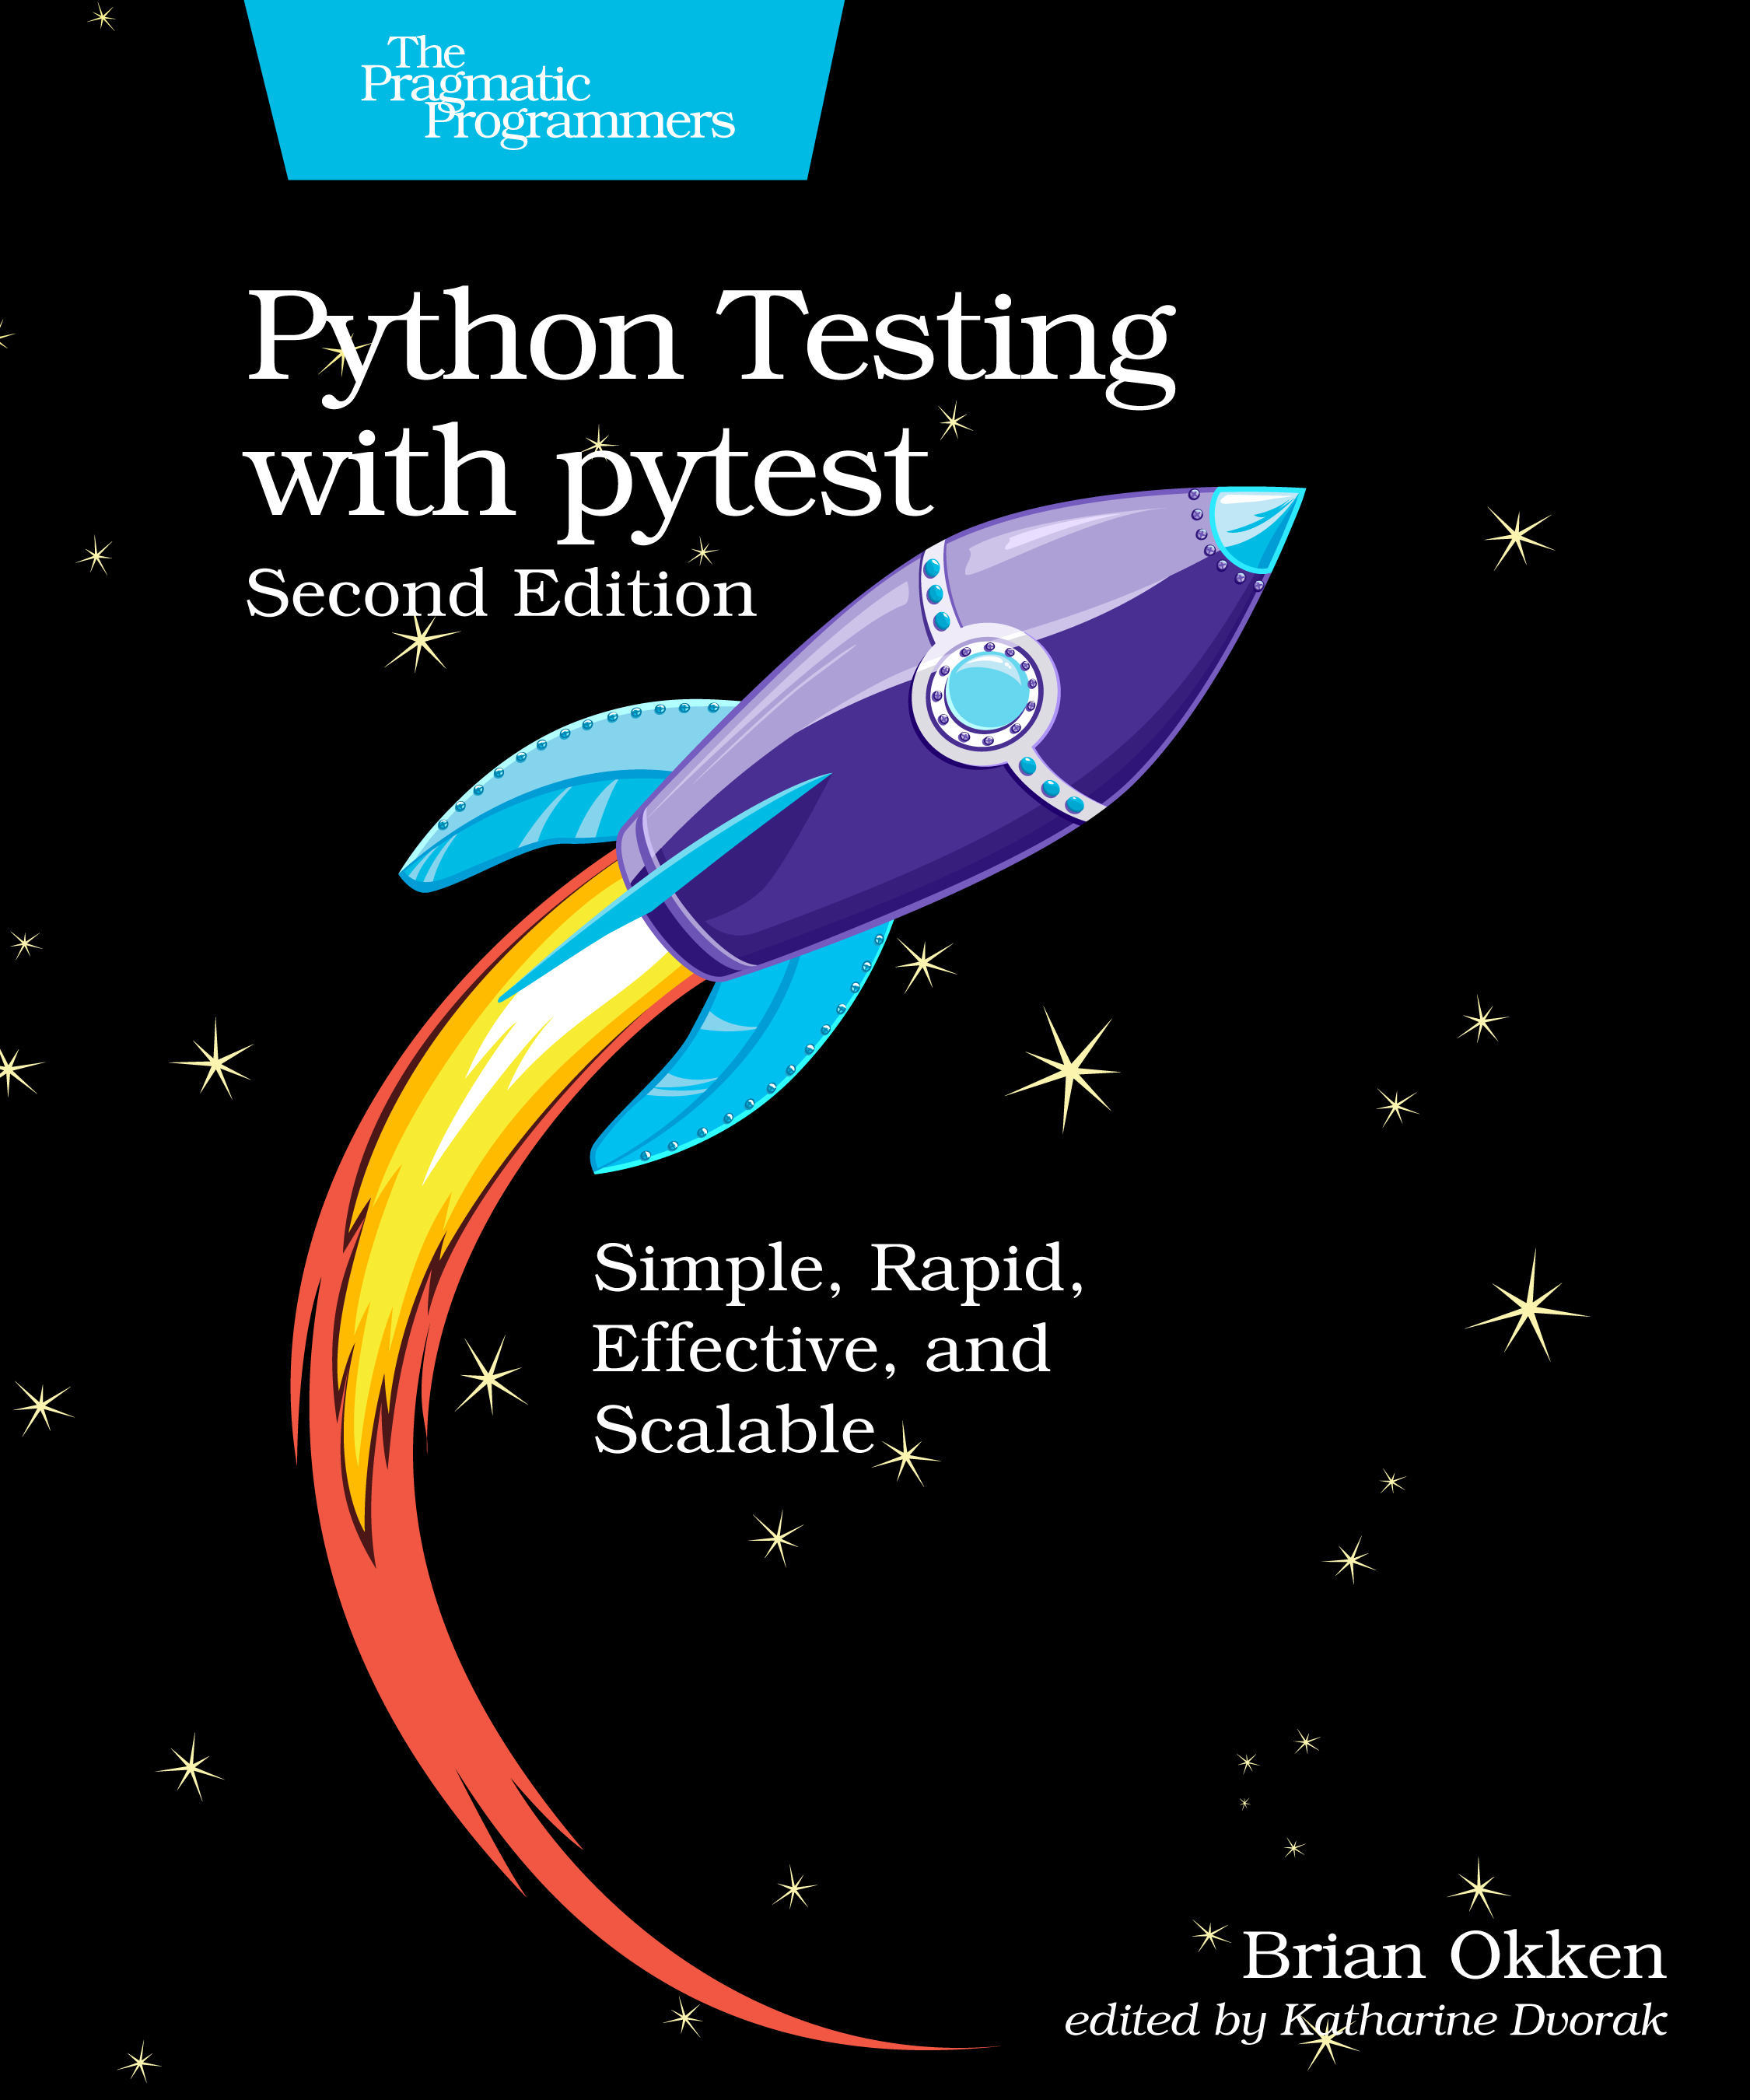 pytest-monkeytype - Python Package Health Analysis